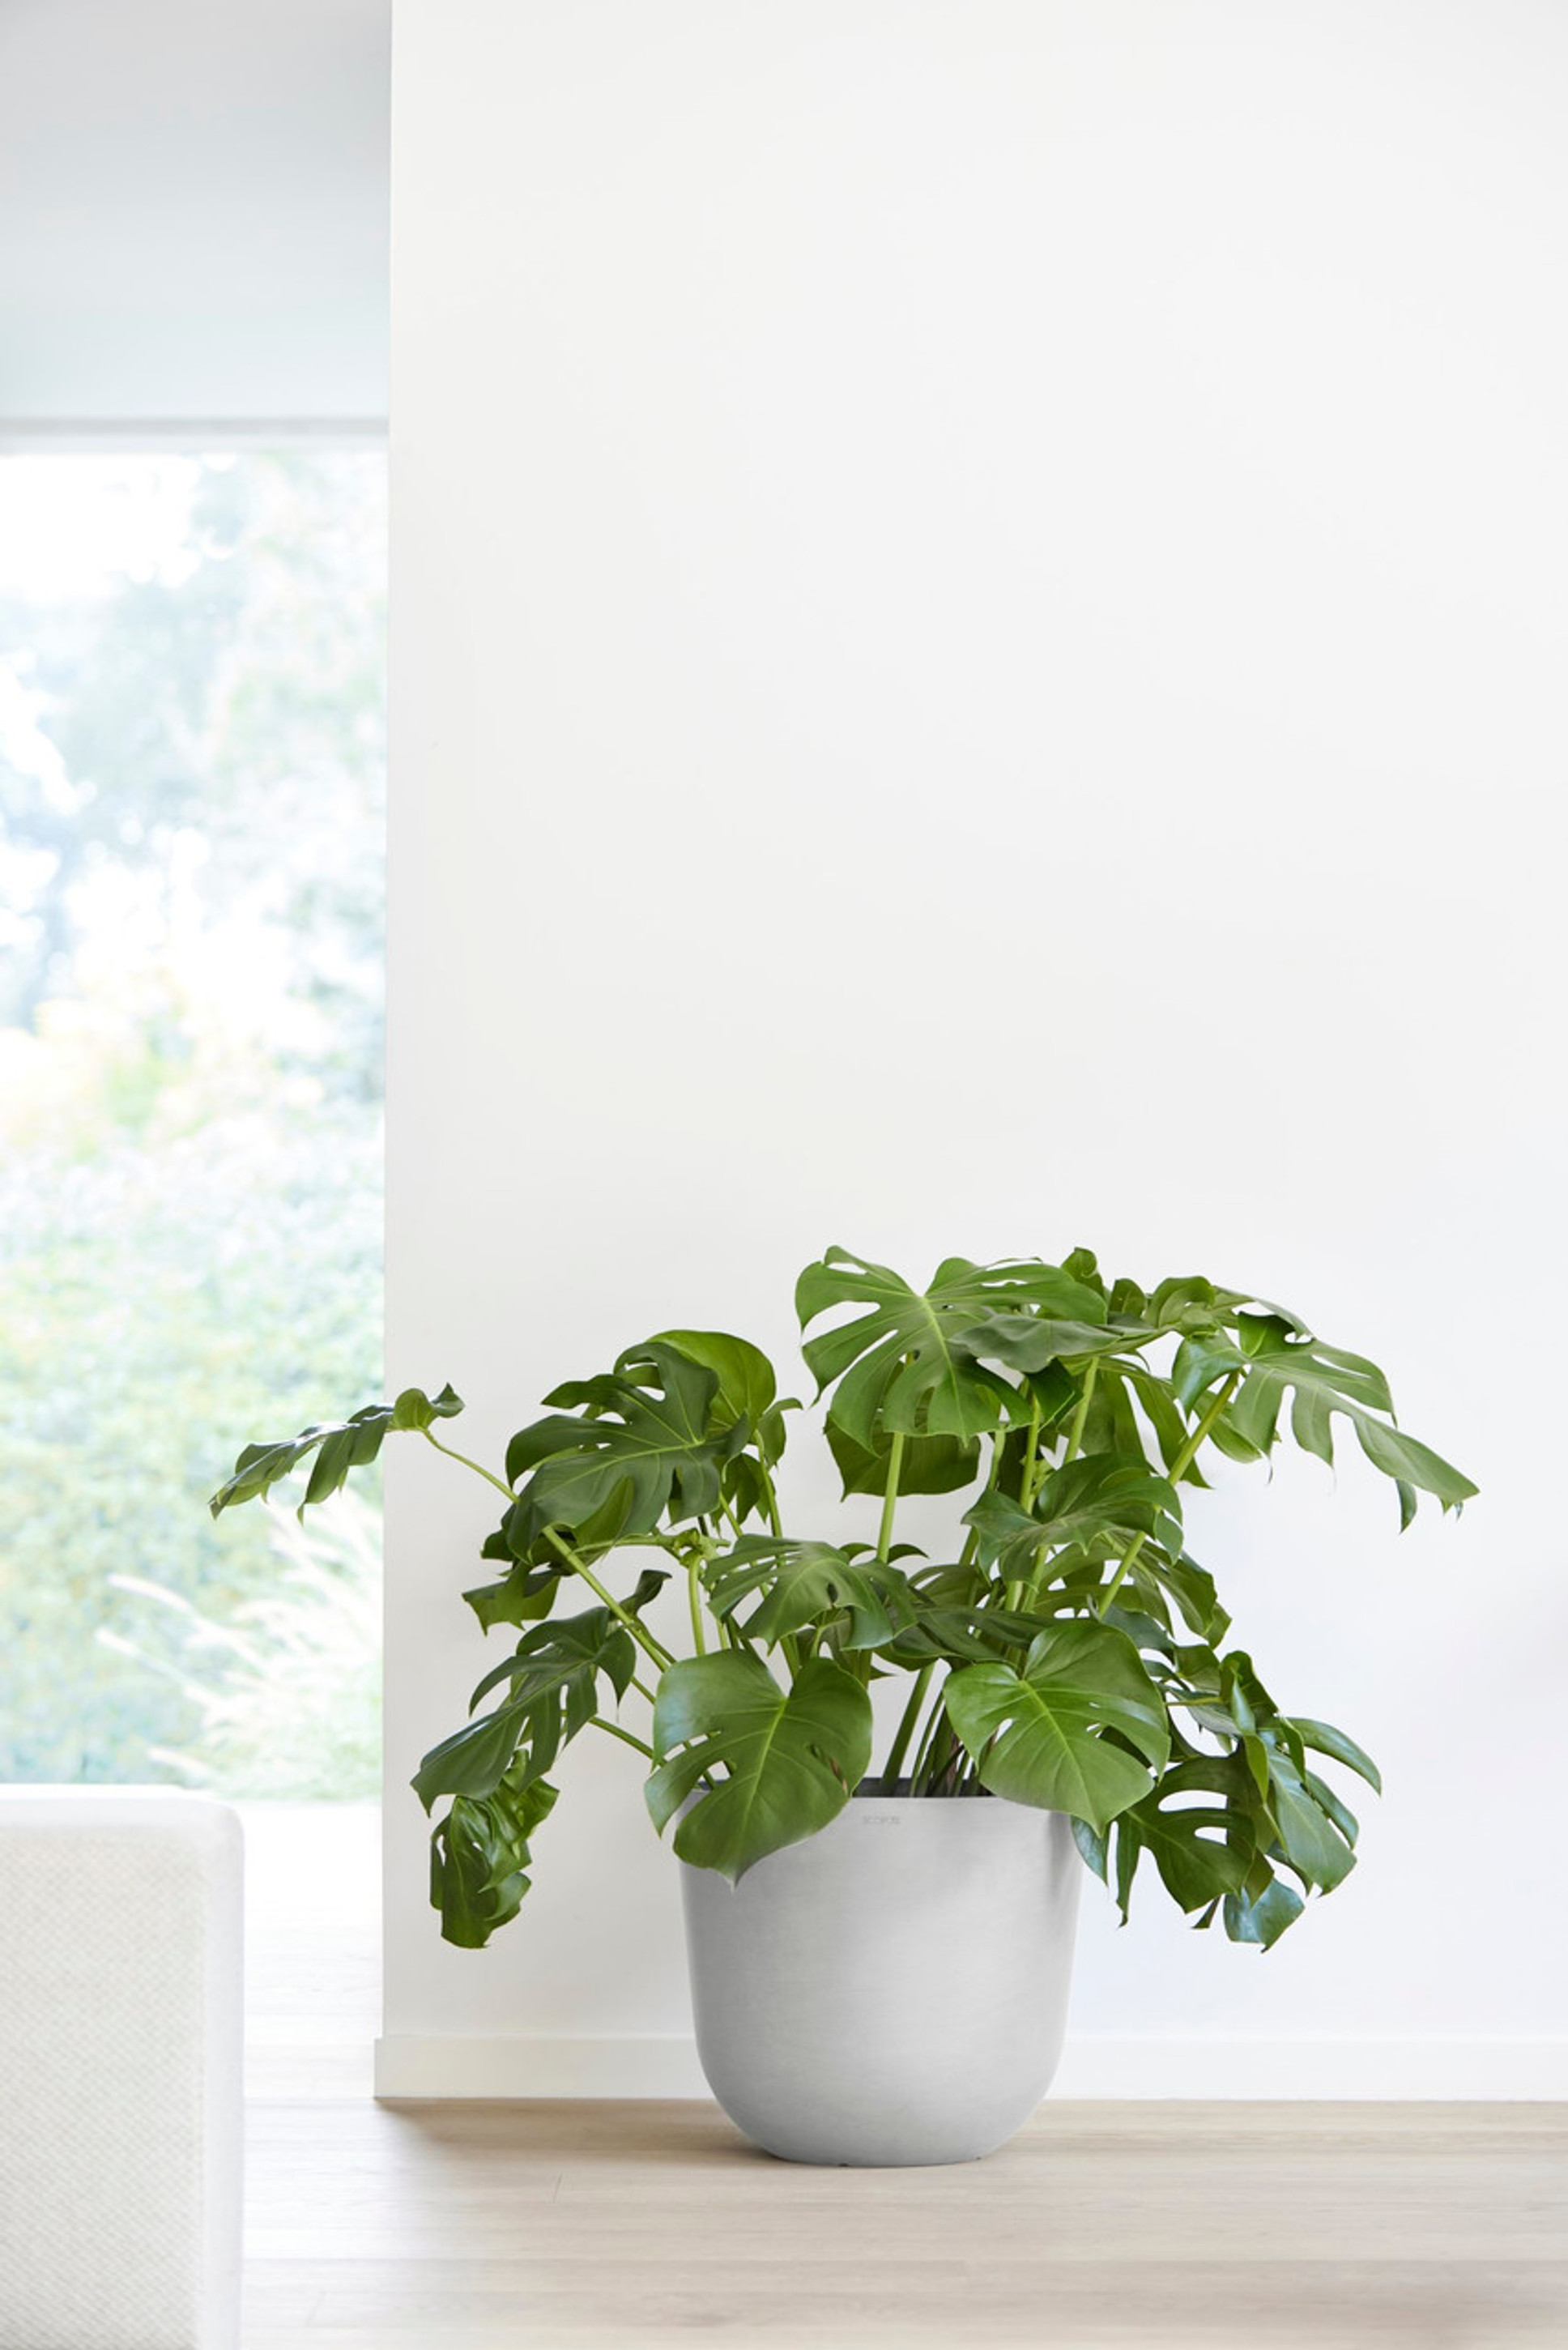 EcoPots Oslo Durable Indoor/Outdoor Modern Recycled Standard Plastic Planter Flower Pot